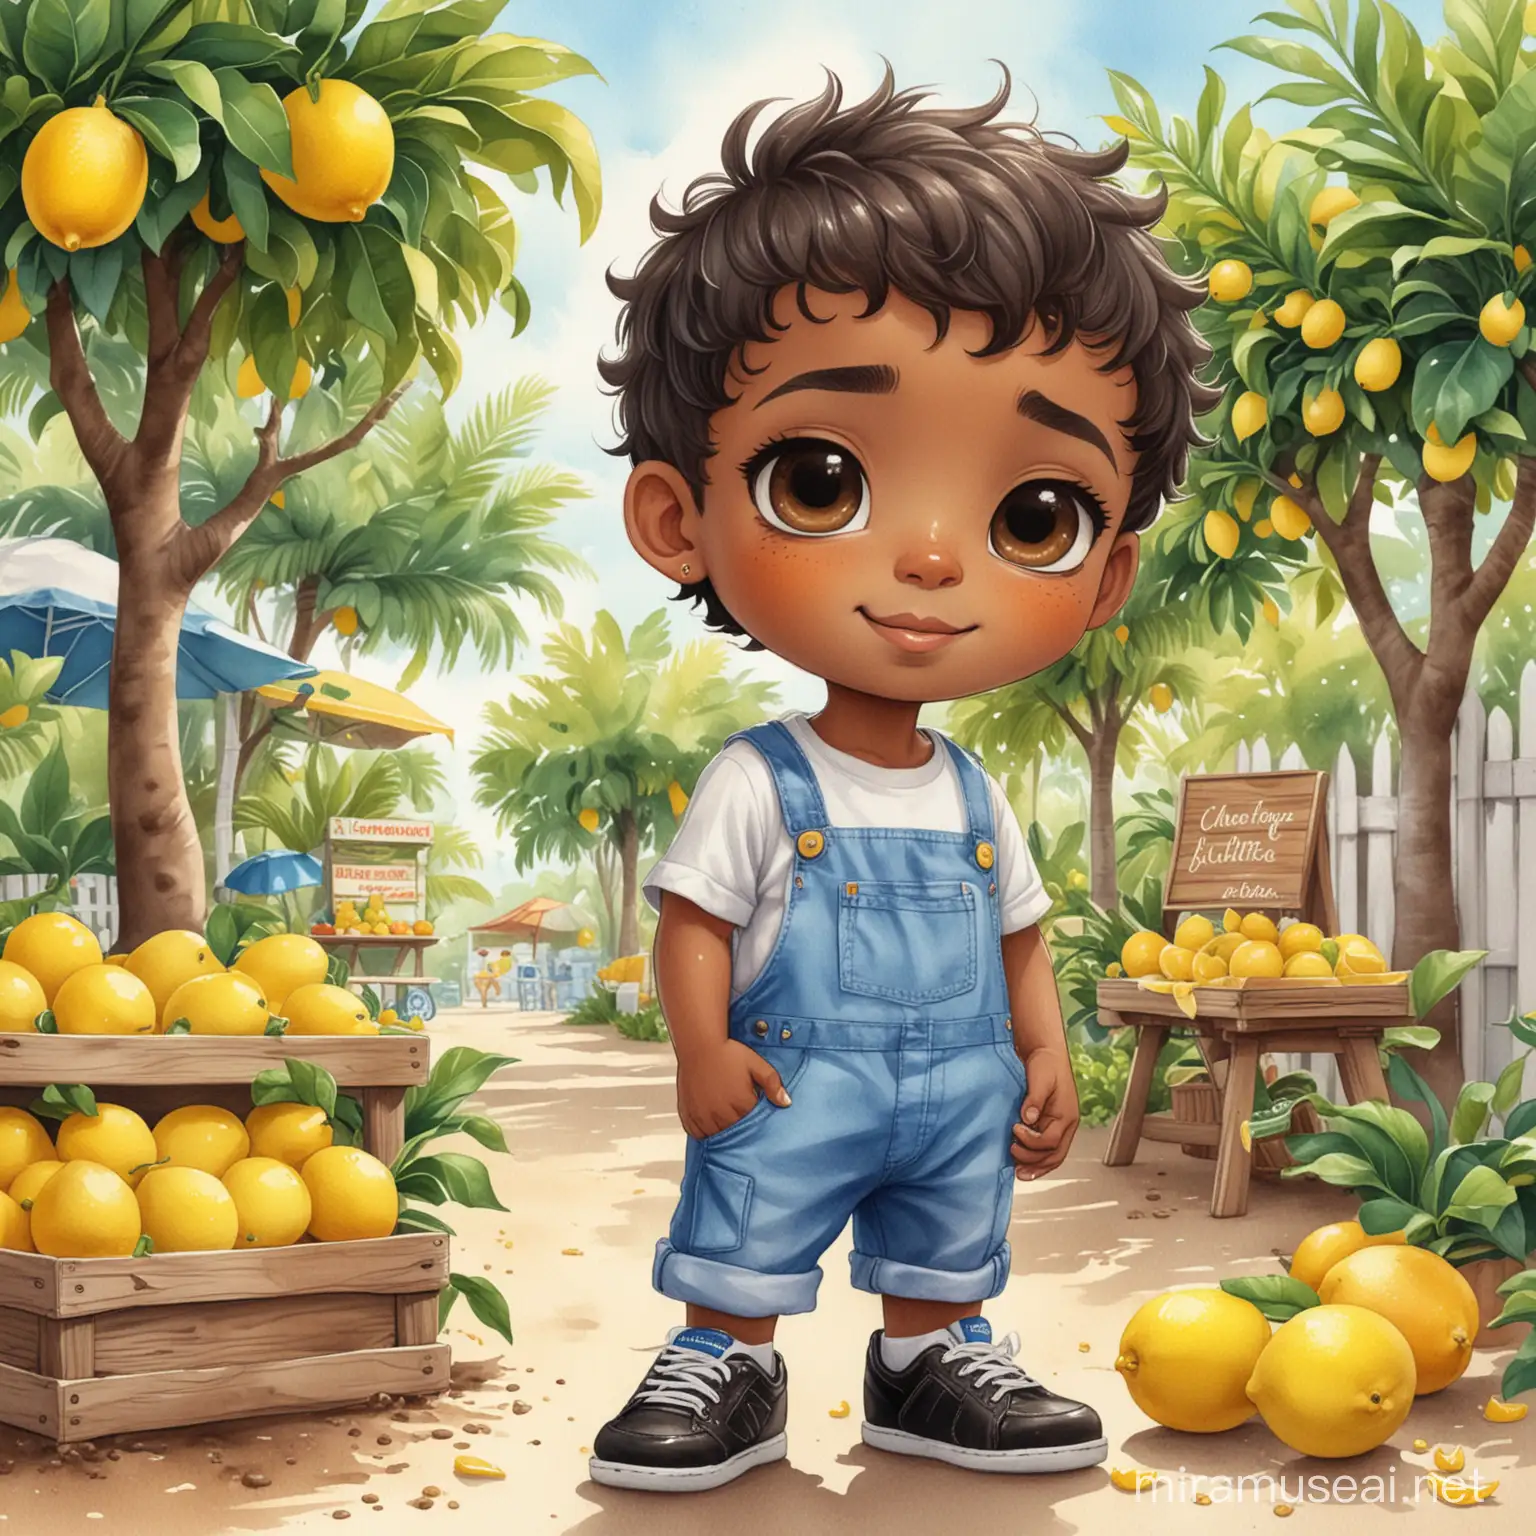 Chibi Cartoon Latino Boy Holding Lemon at Lemonade Stand